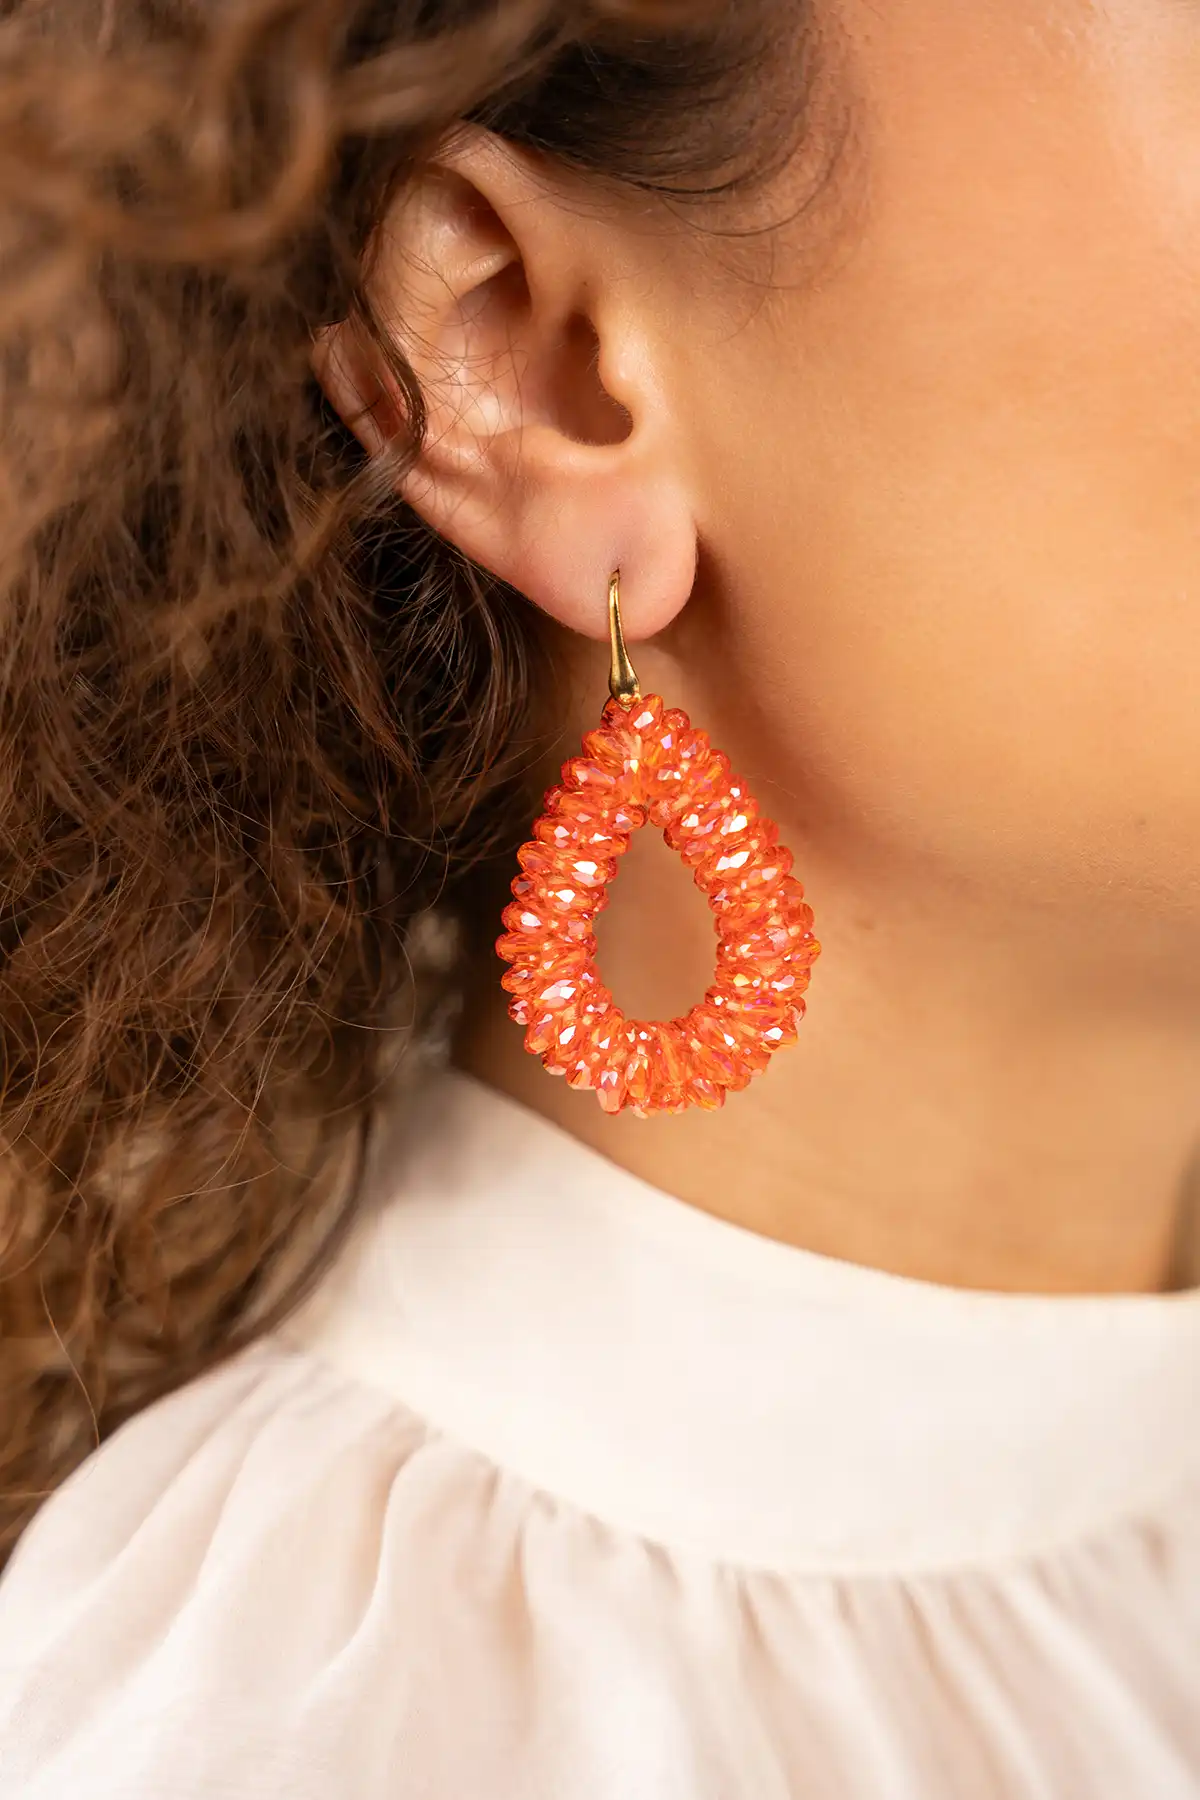 Orange earrings Anne Drop L marquis lionlott-theme.productDescriptionPage.SEO.byTheBrand